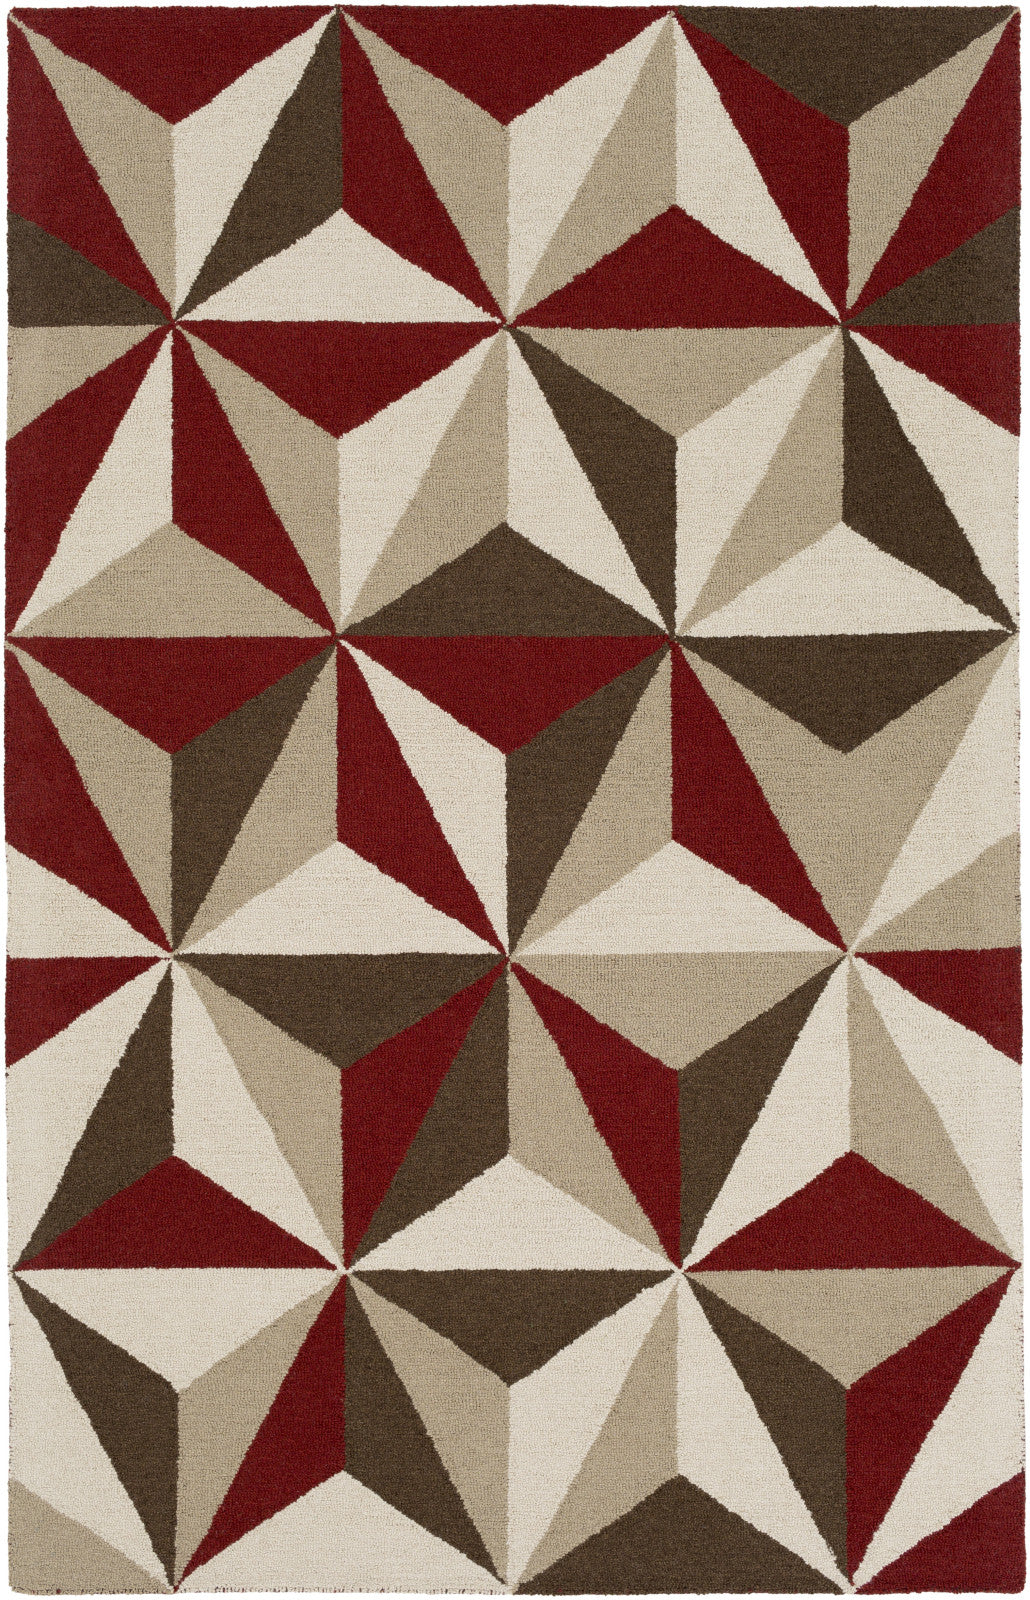 Artistic Weavers Impression Callie Crimson Red/Chocolate Brown Area Rug main image